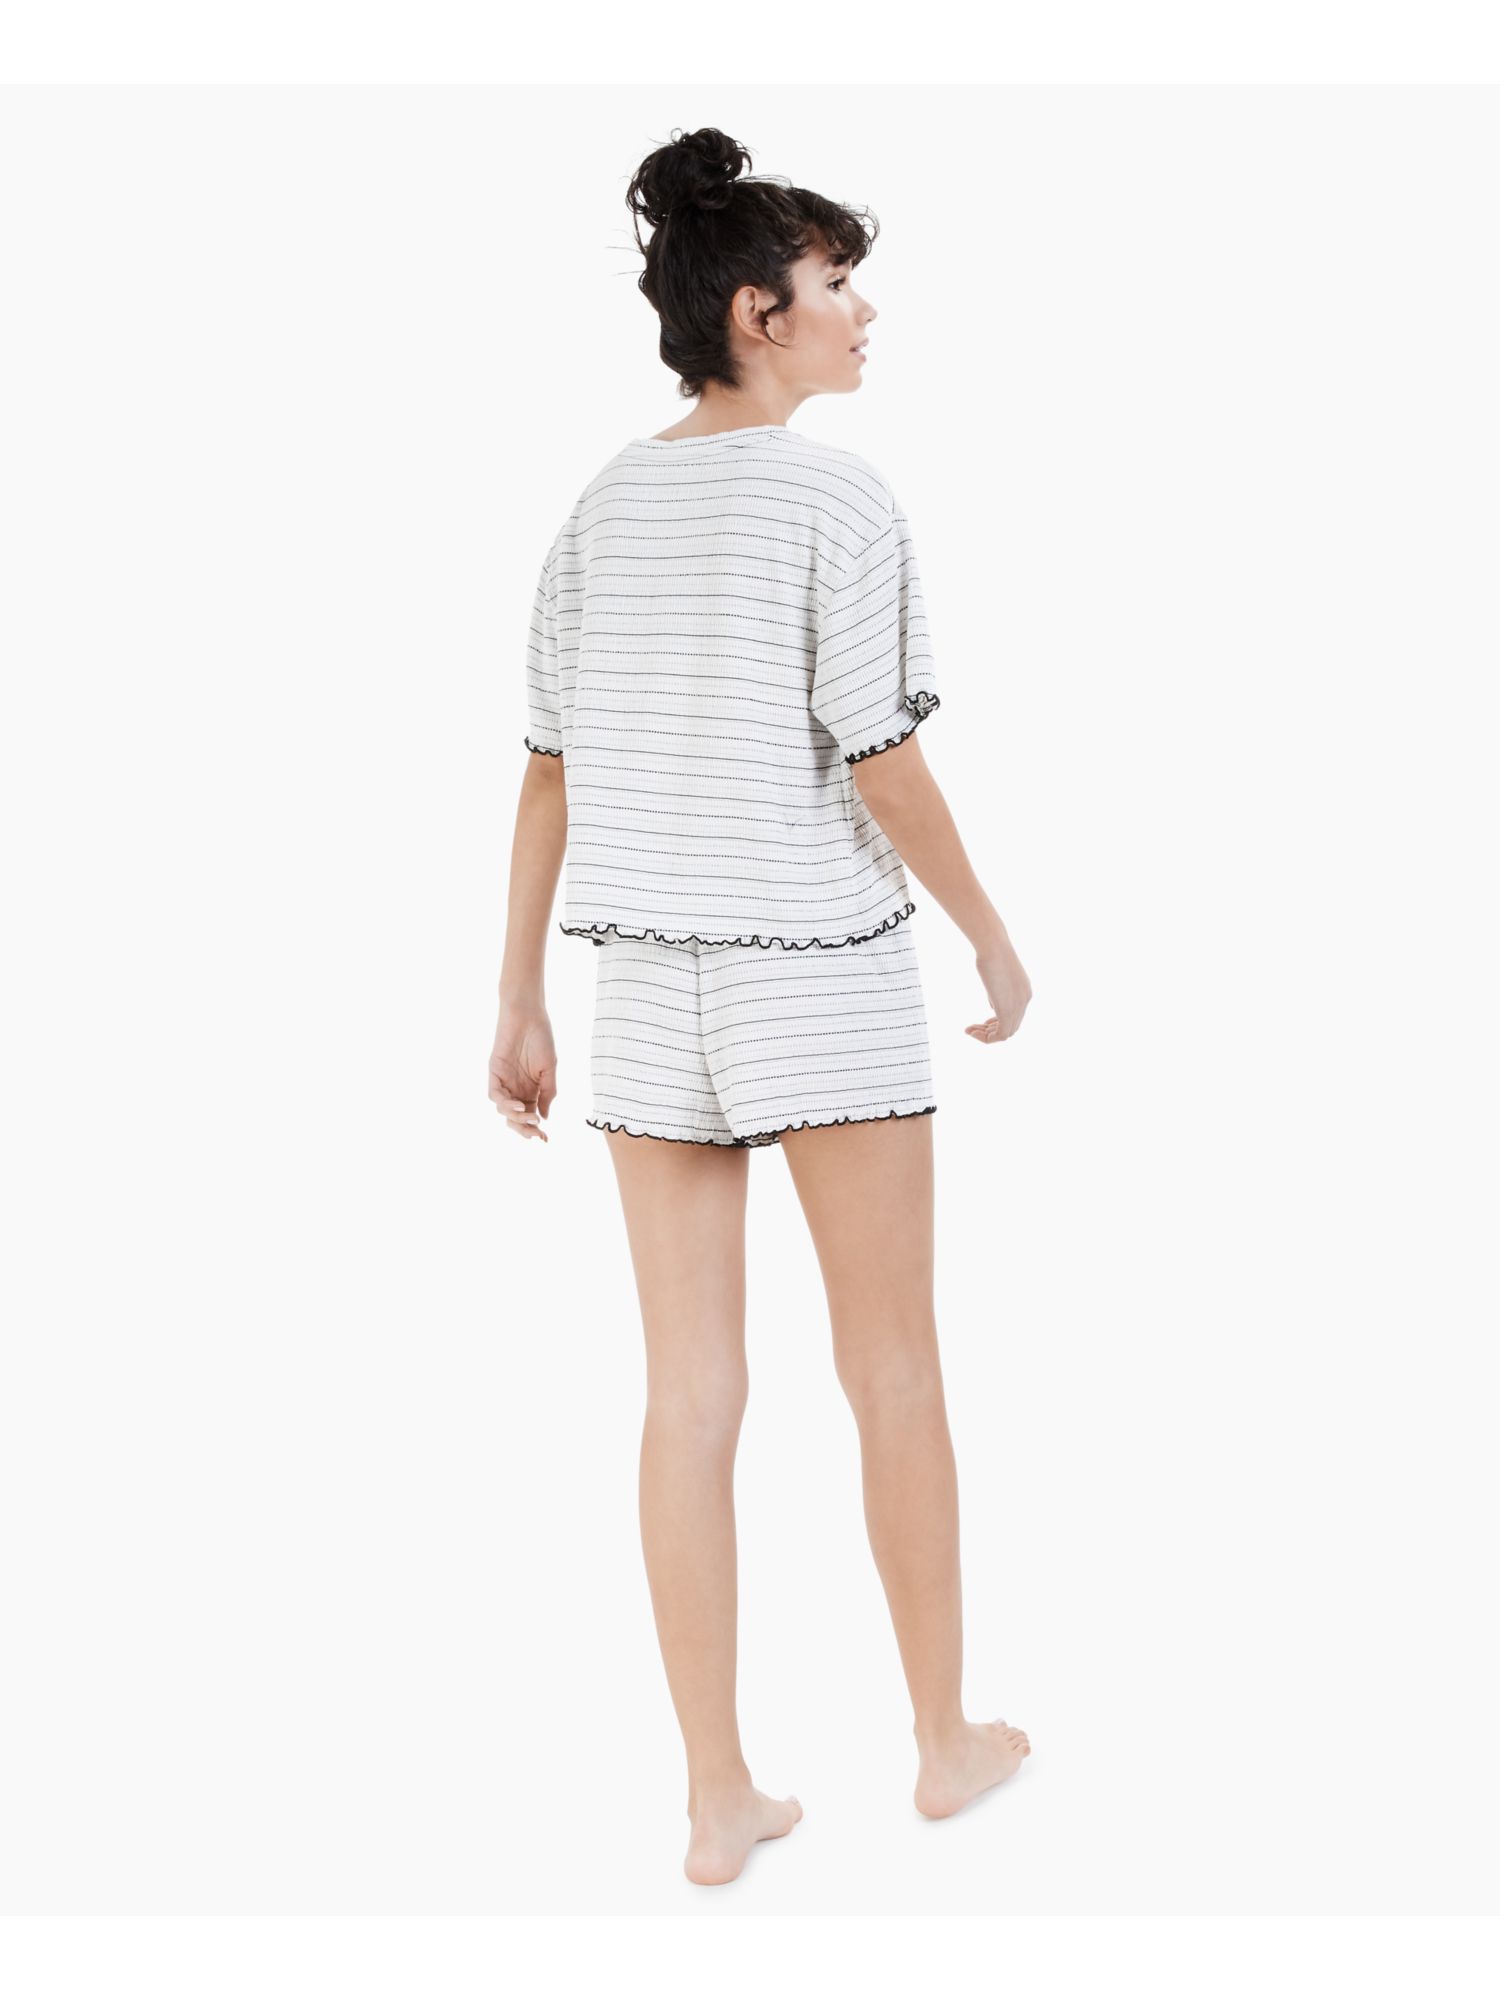 JENNI Sets White Textured Striped Short Sleeve Round Neck T-Shirt Sleepwear  Size XL